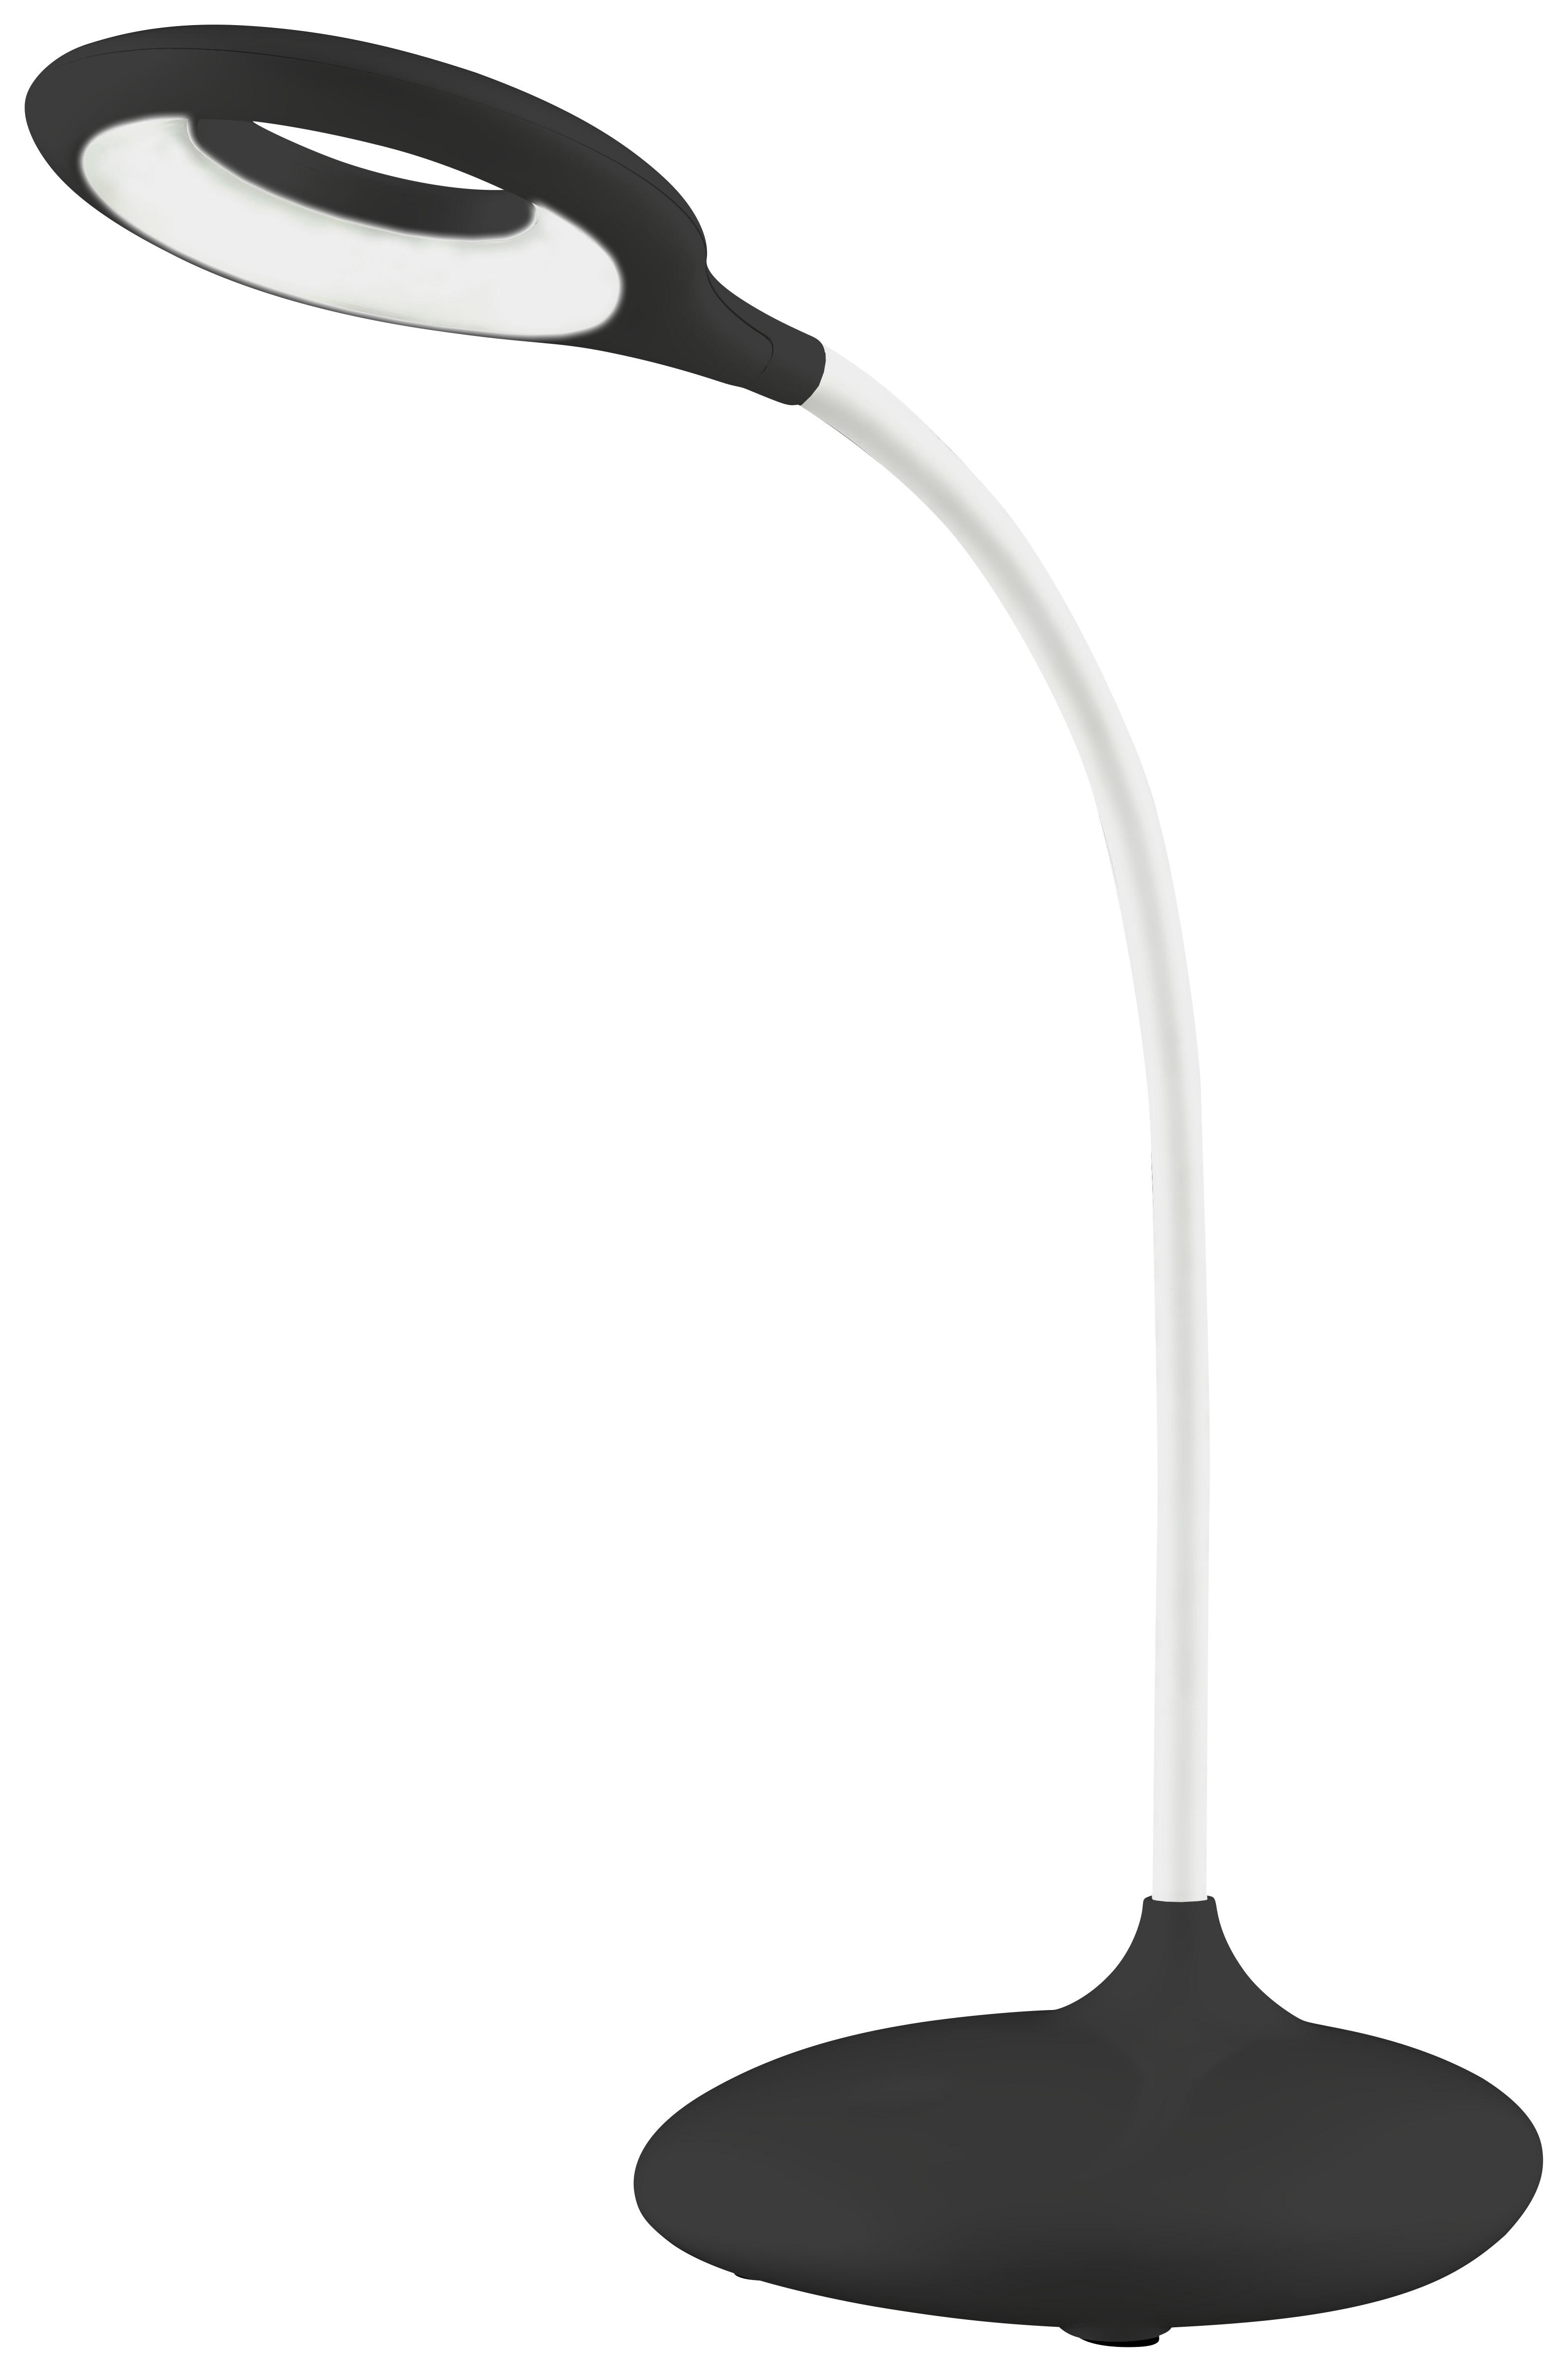 LED-SKRIVBORDSLAMPA   - svart, Trend, plast (41cm) - Best Price